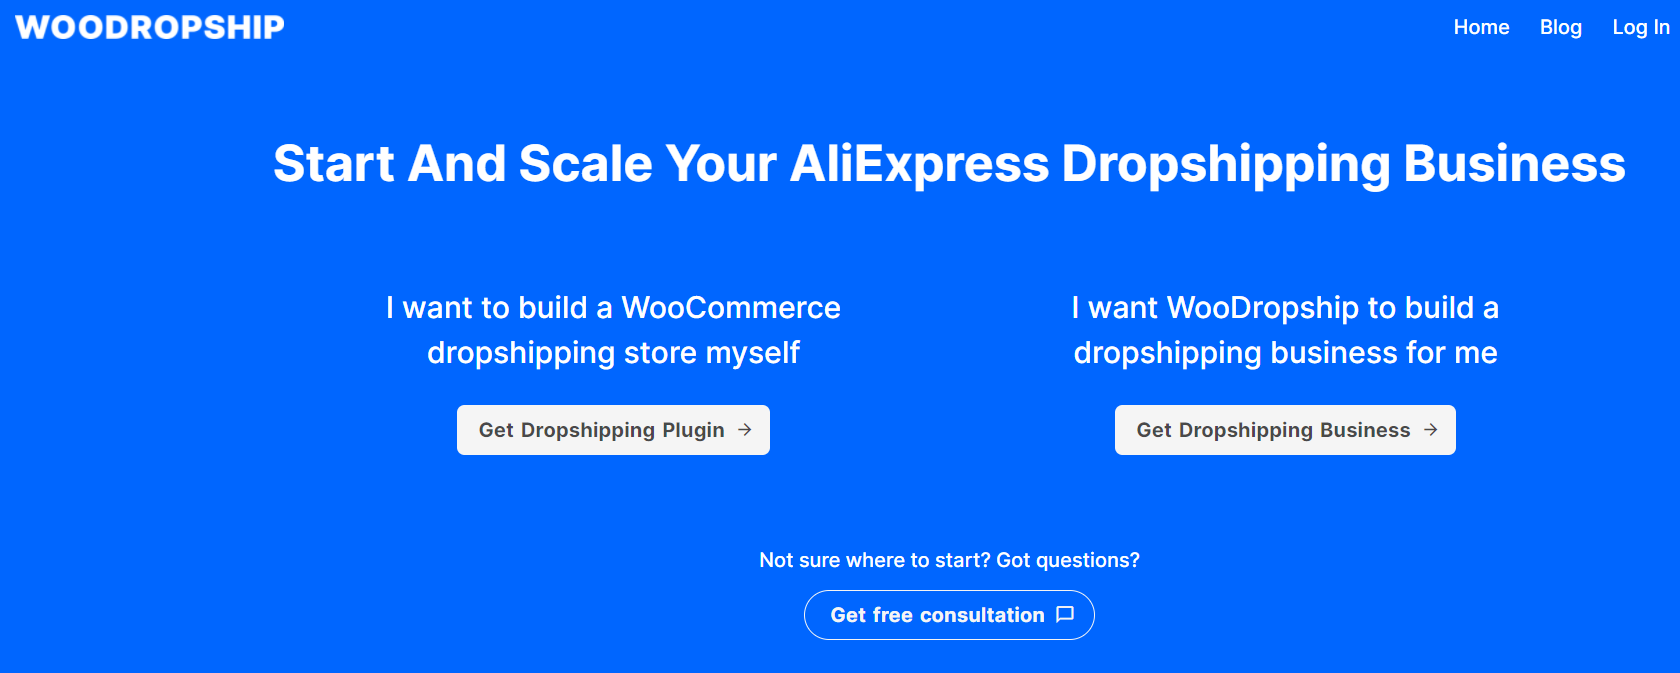 Woodropship , WooCommerce Dropshipping Plugins